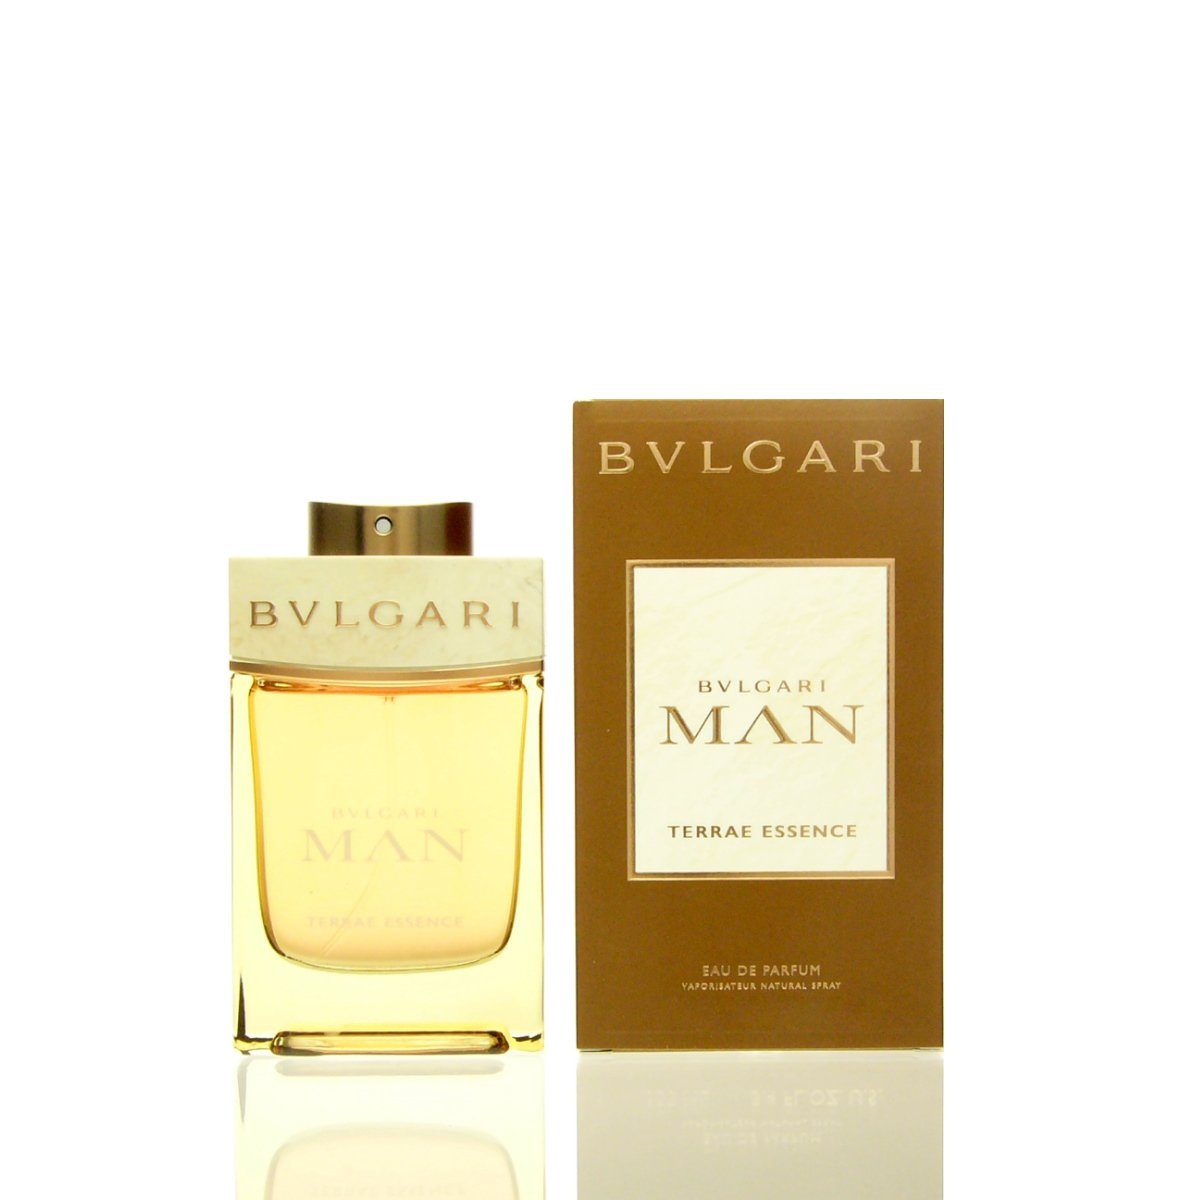 ml Parfum Eau de BVLGARI Bvlgari Man Essence 100 Parfum de Eau Terrae